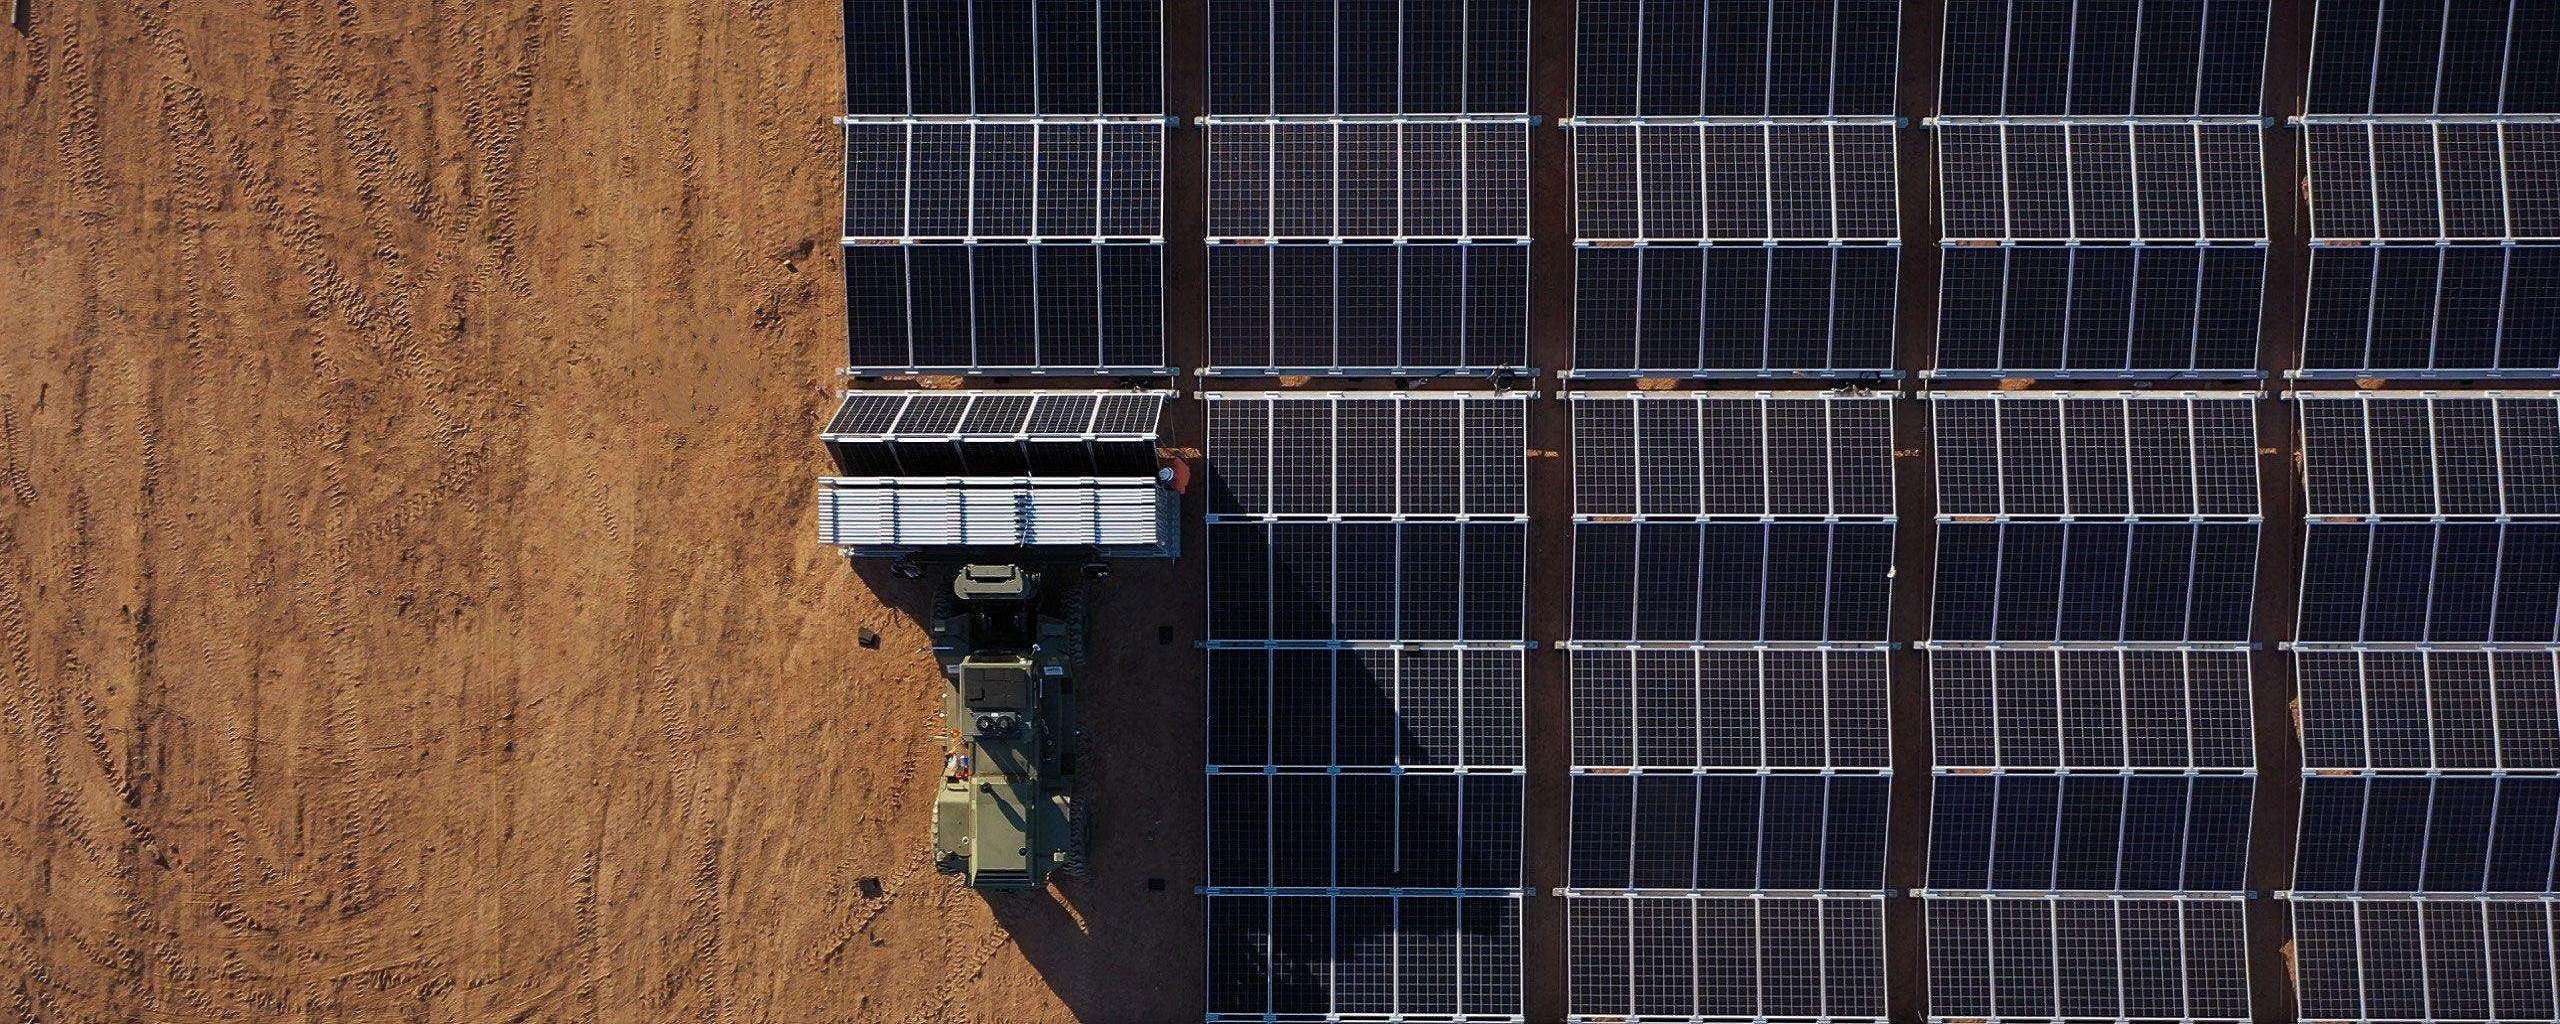 Rapid, low-cost solar deployment